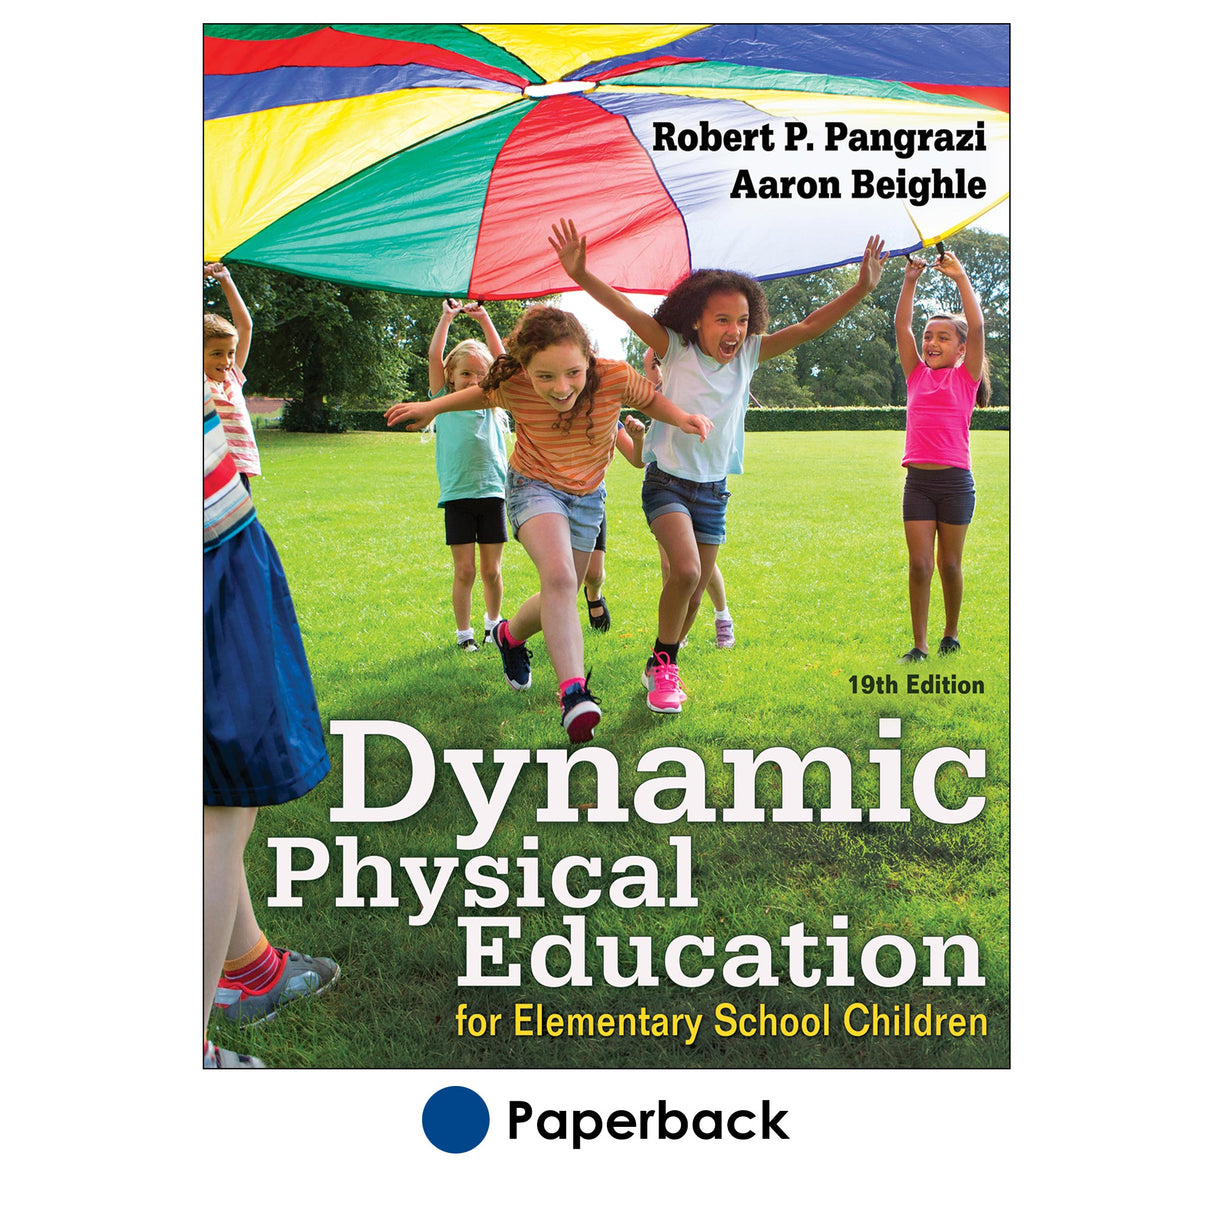 Dynamic Physical Education for Elementary School Children-19th Edition